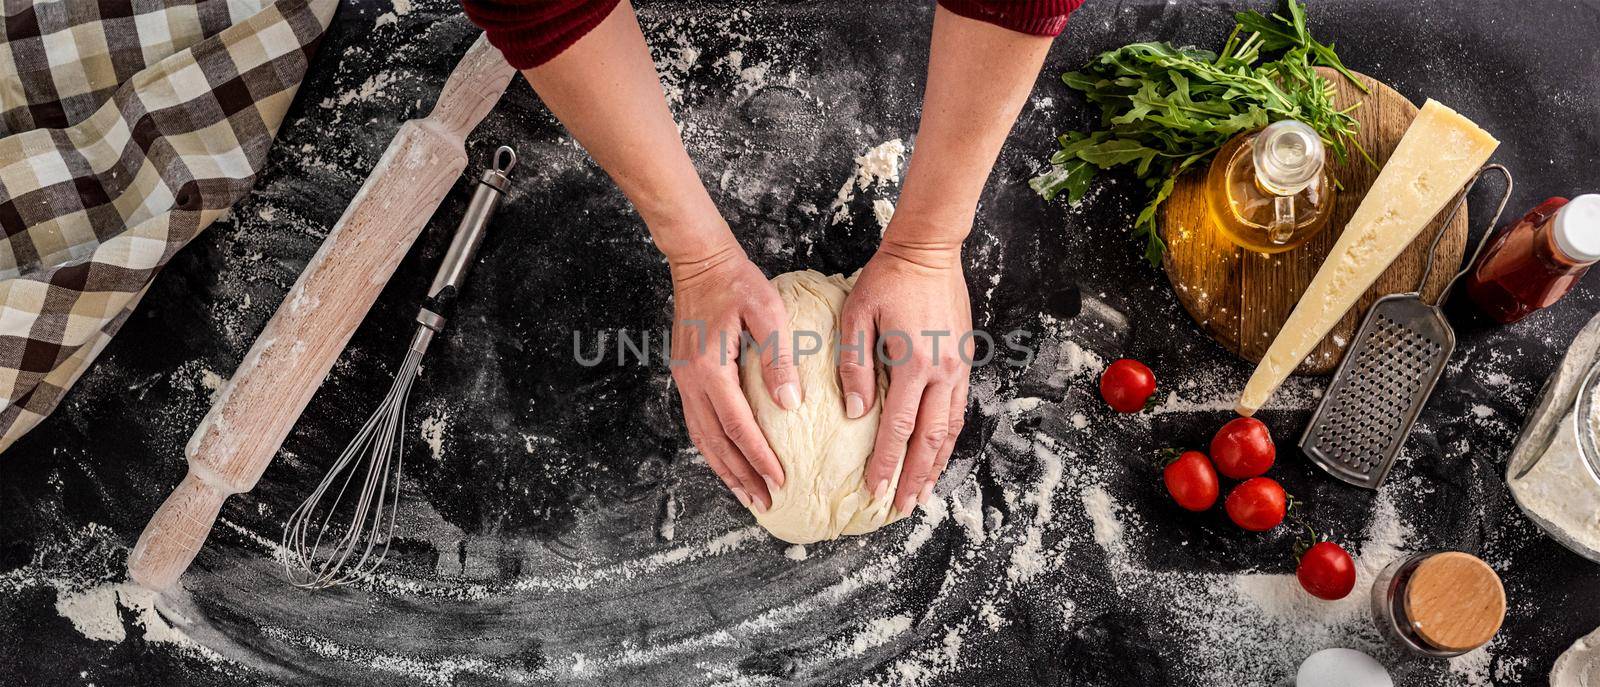 Woman kneading dough for pizza baking by tan4ikk1